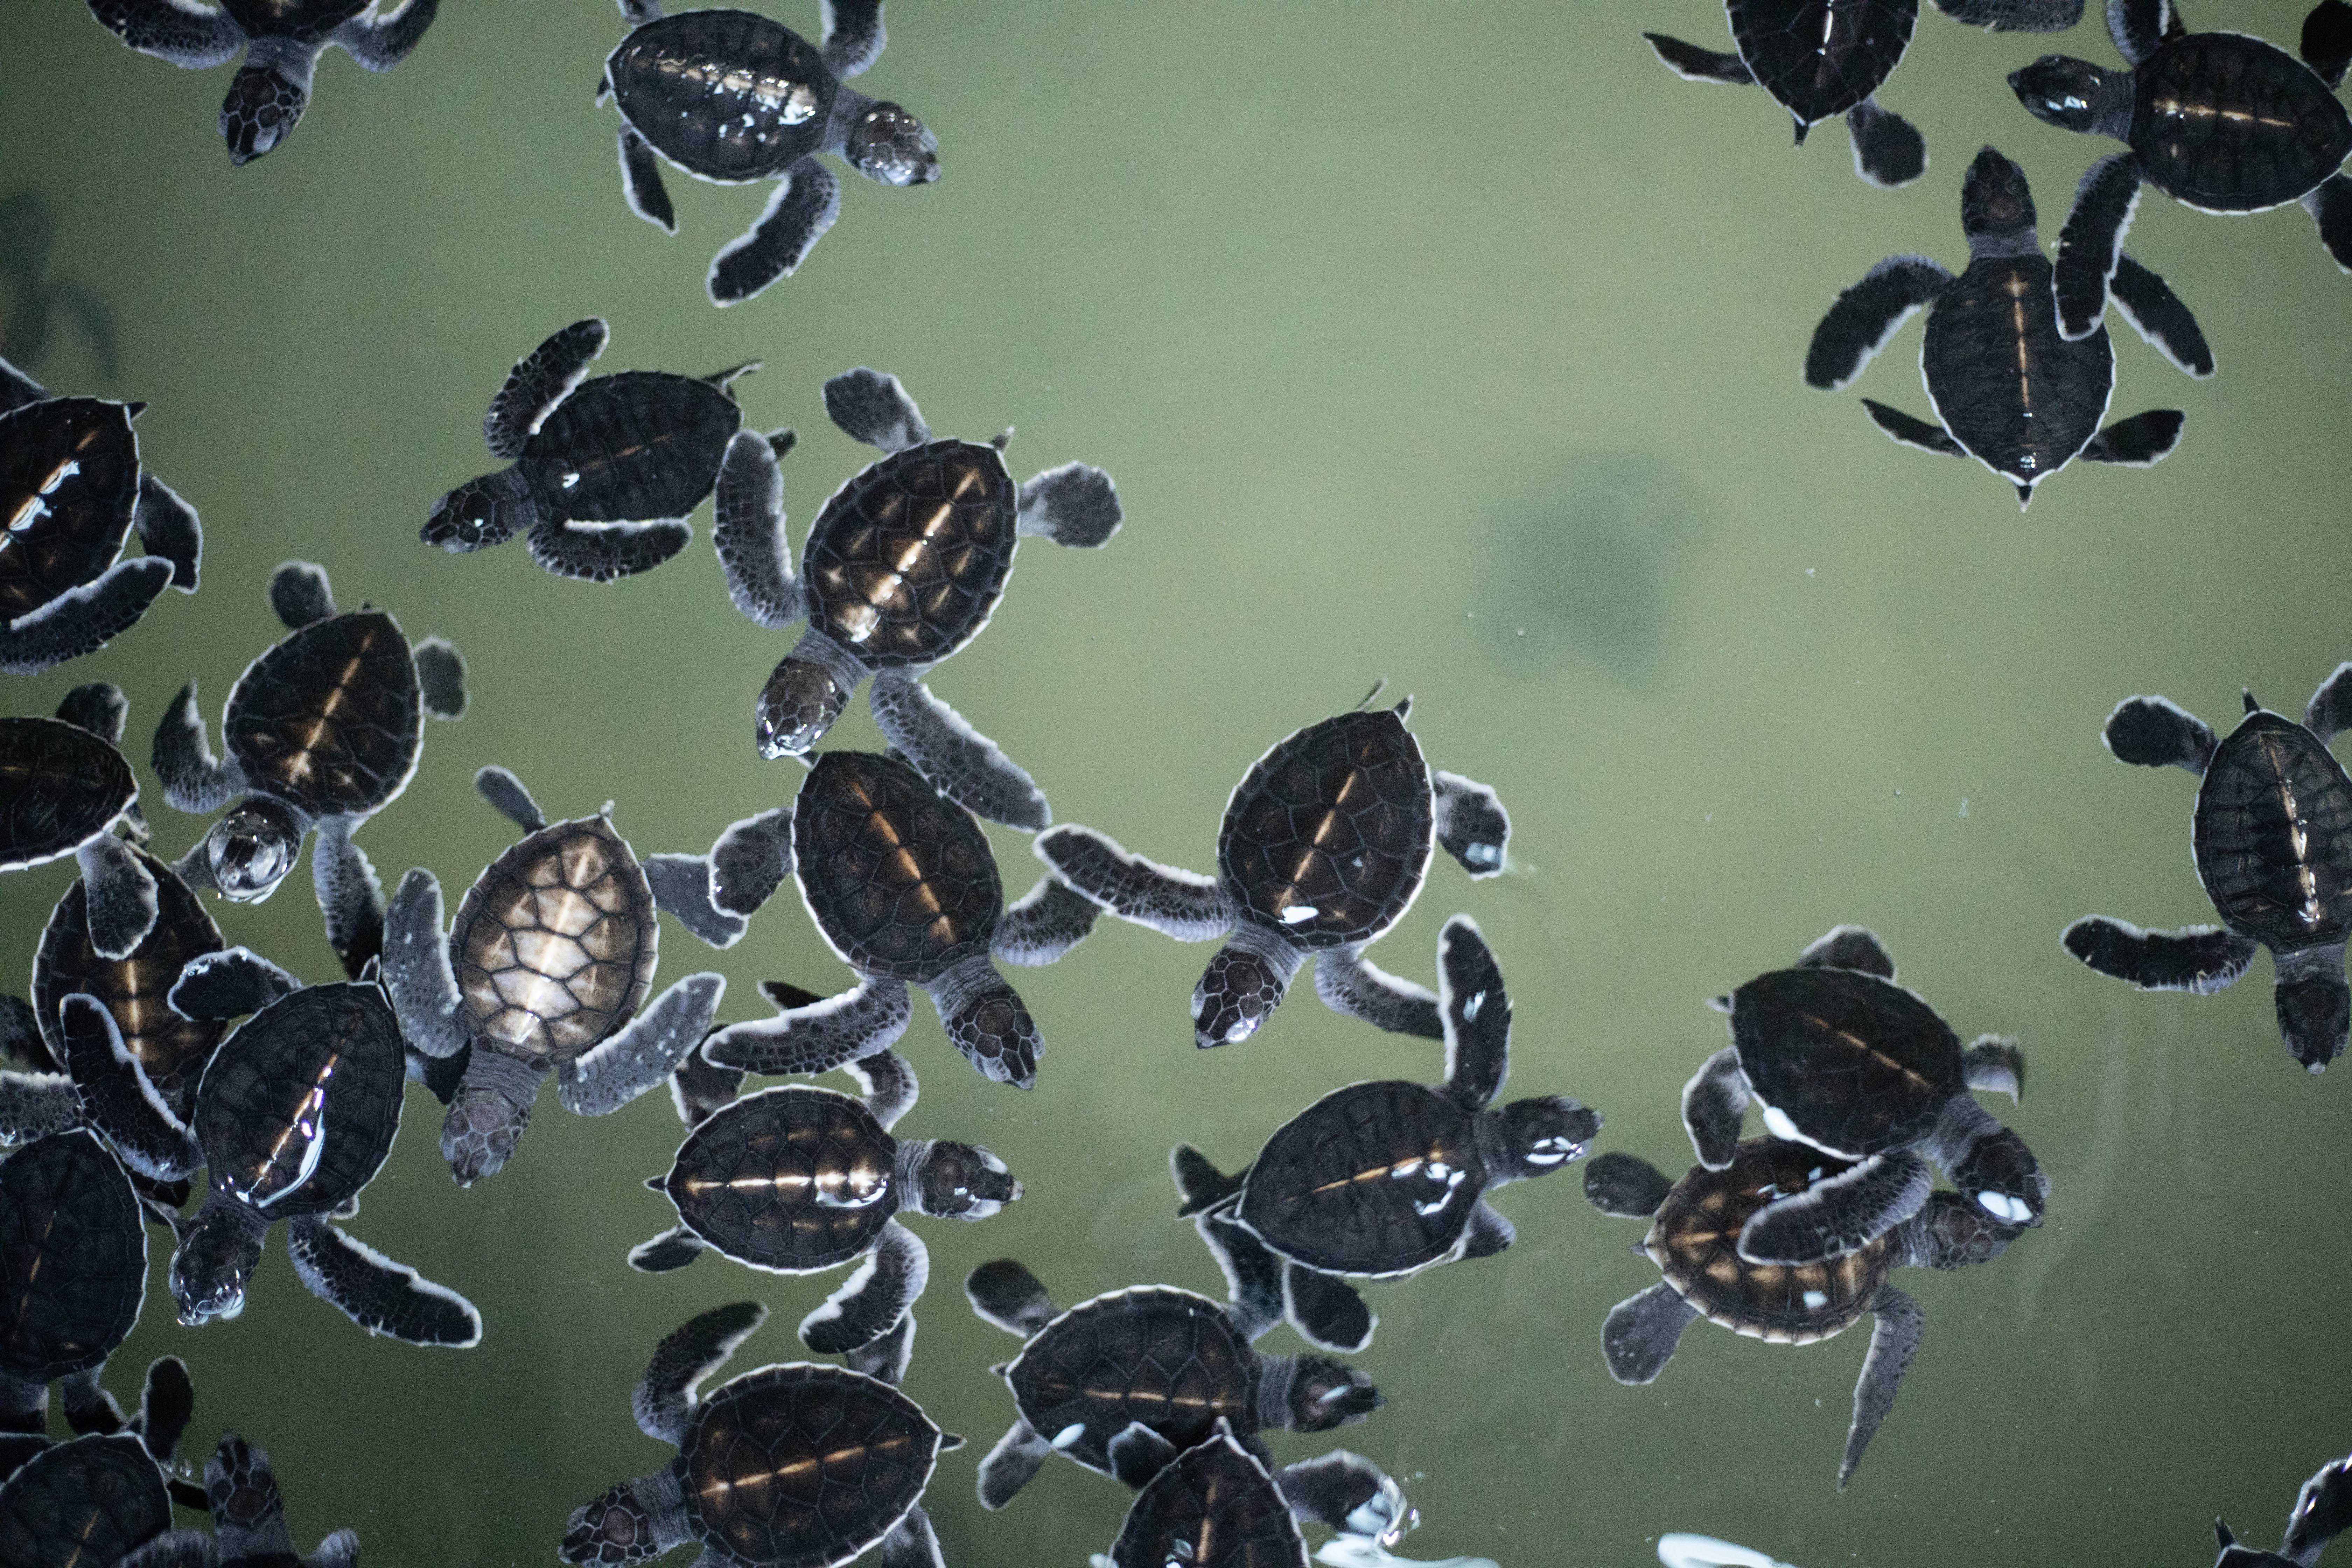 Turtles in a Pool